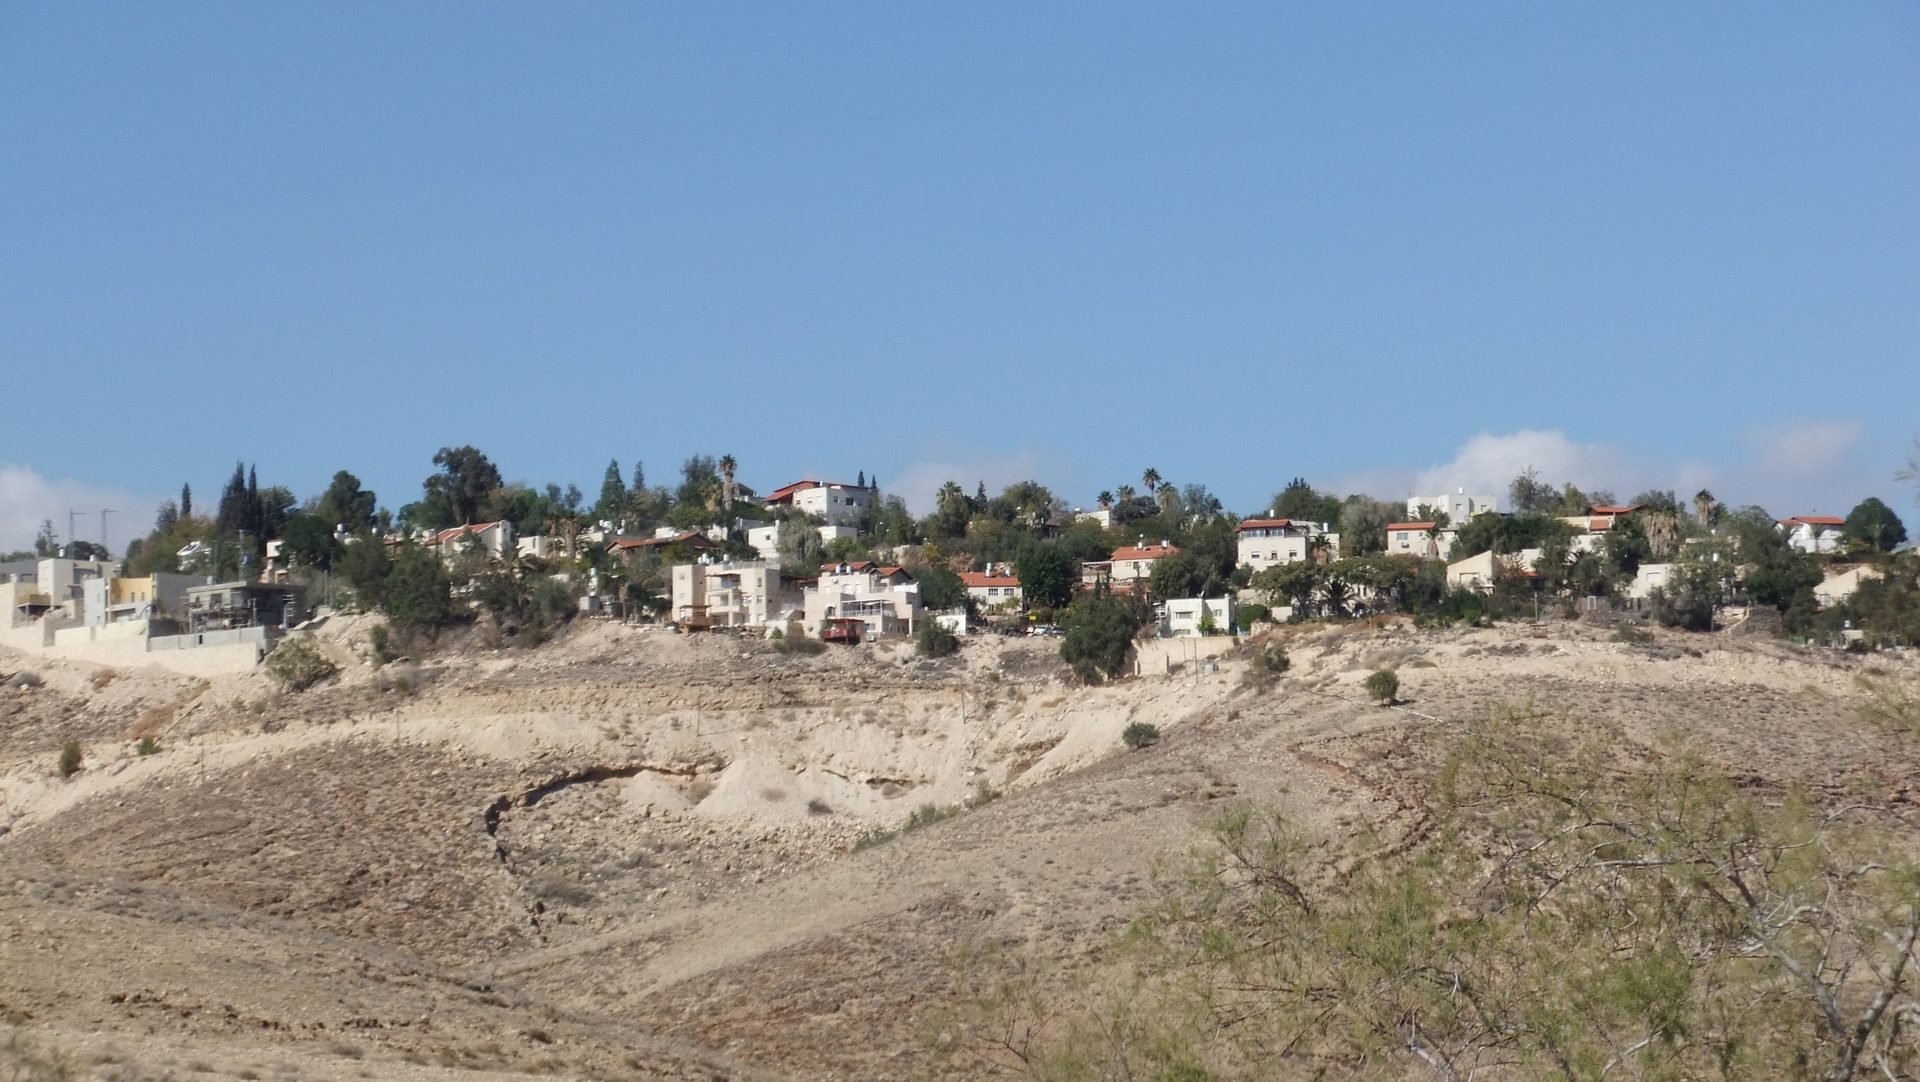 La colonie israélienne de Kfar Adumin, en Cisjordanie occupée                              | wikimedia commons CC BY-SA 3.0